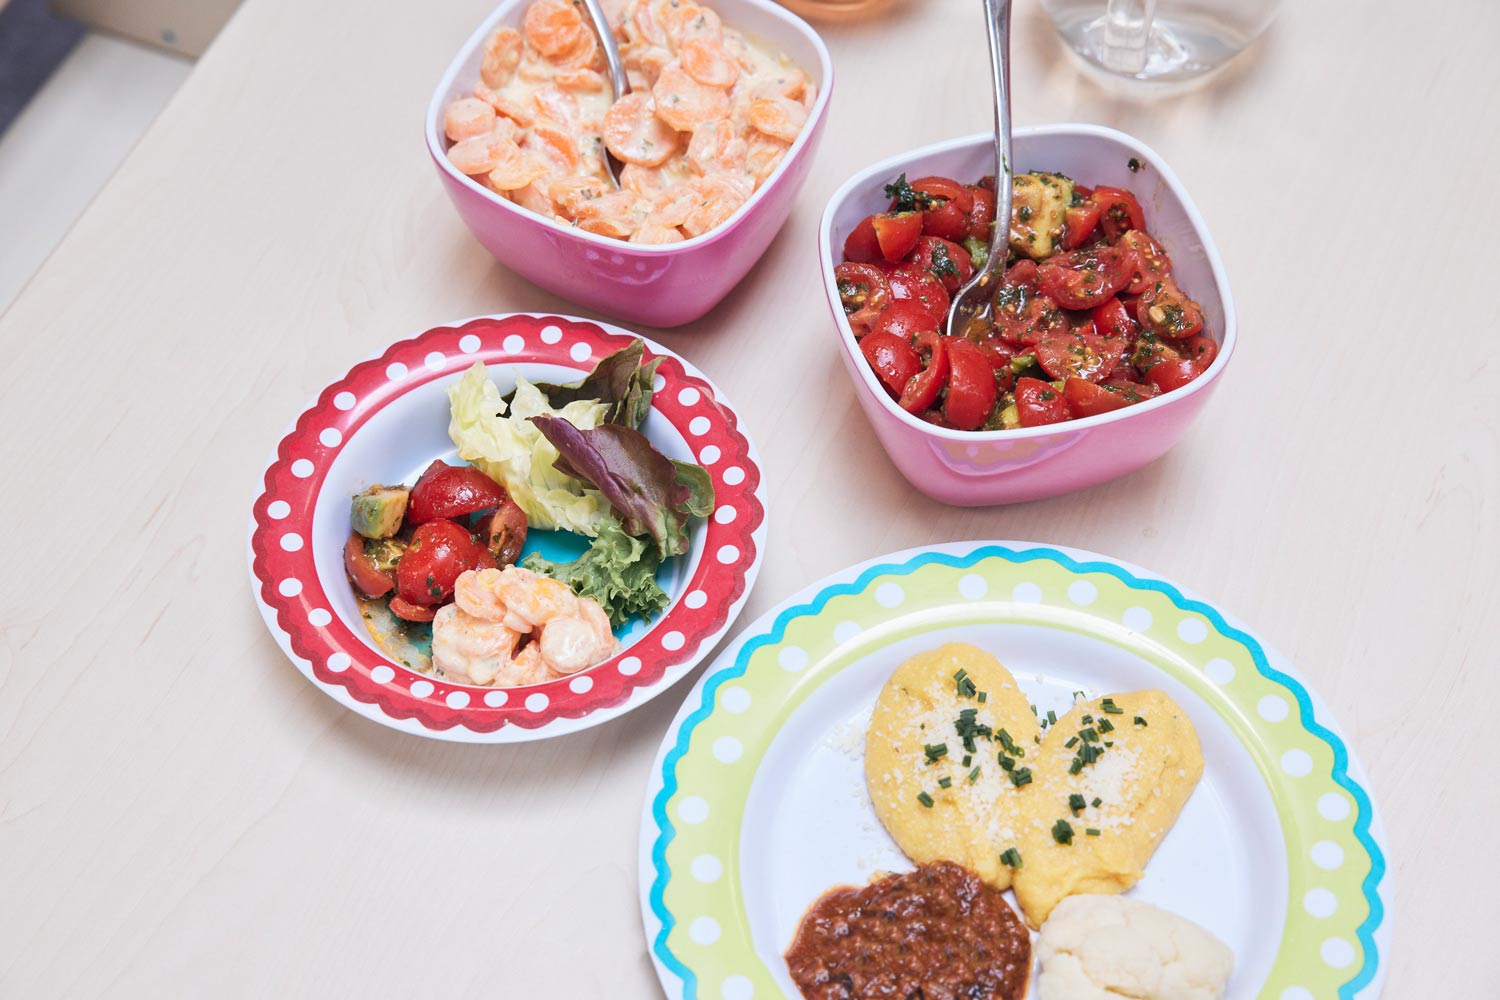 Meals with "Fourchette verte" label